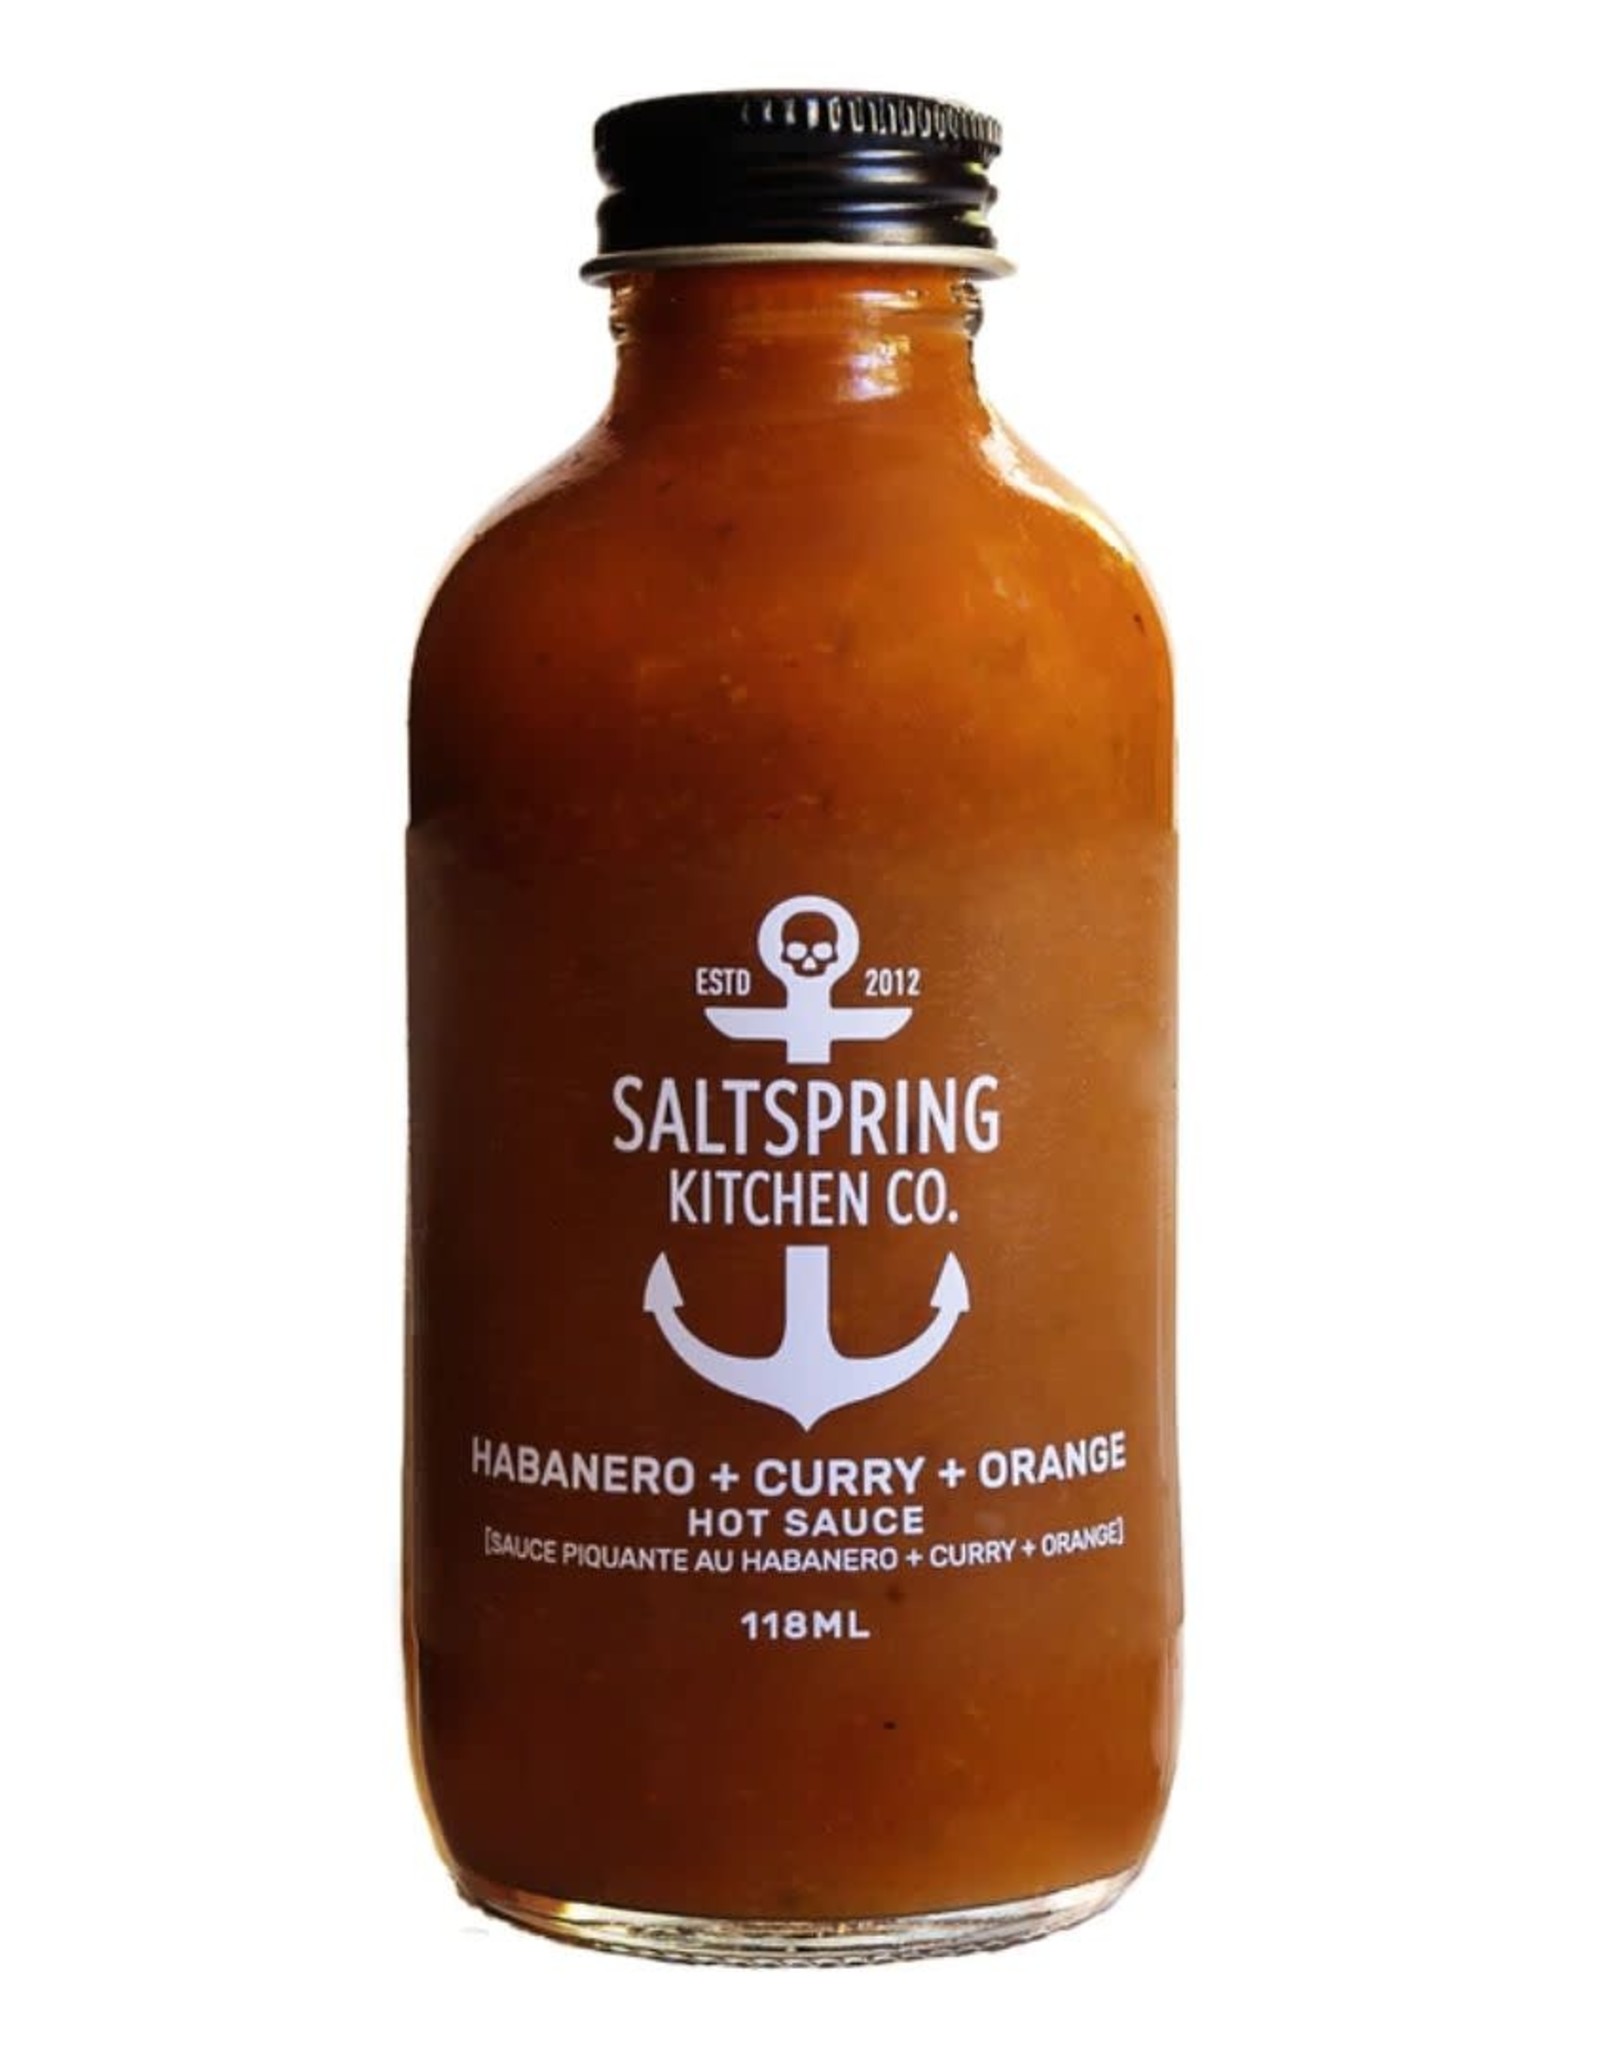 Habanero + Curry + Orange Hot Sauce